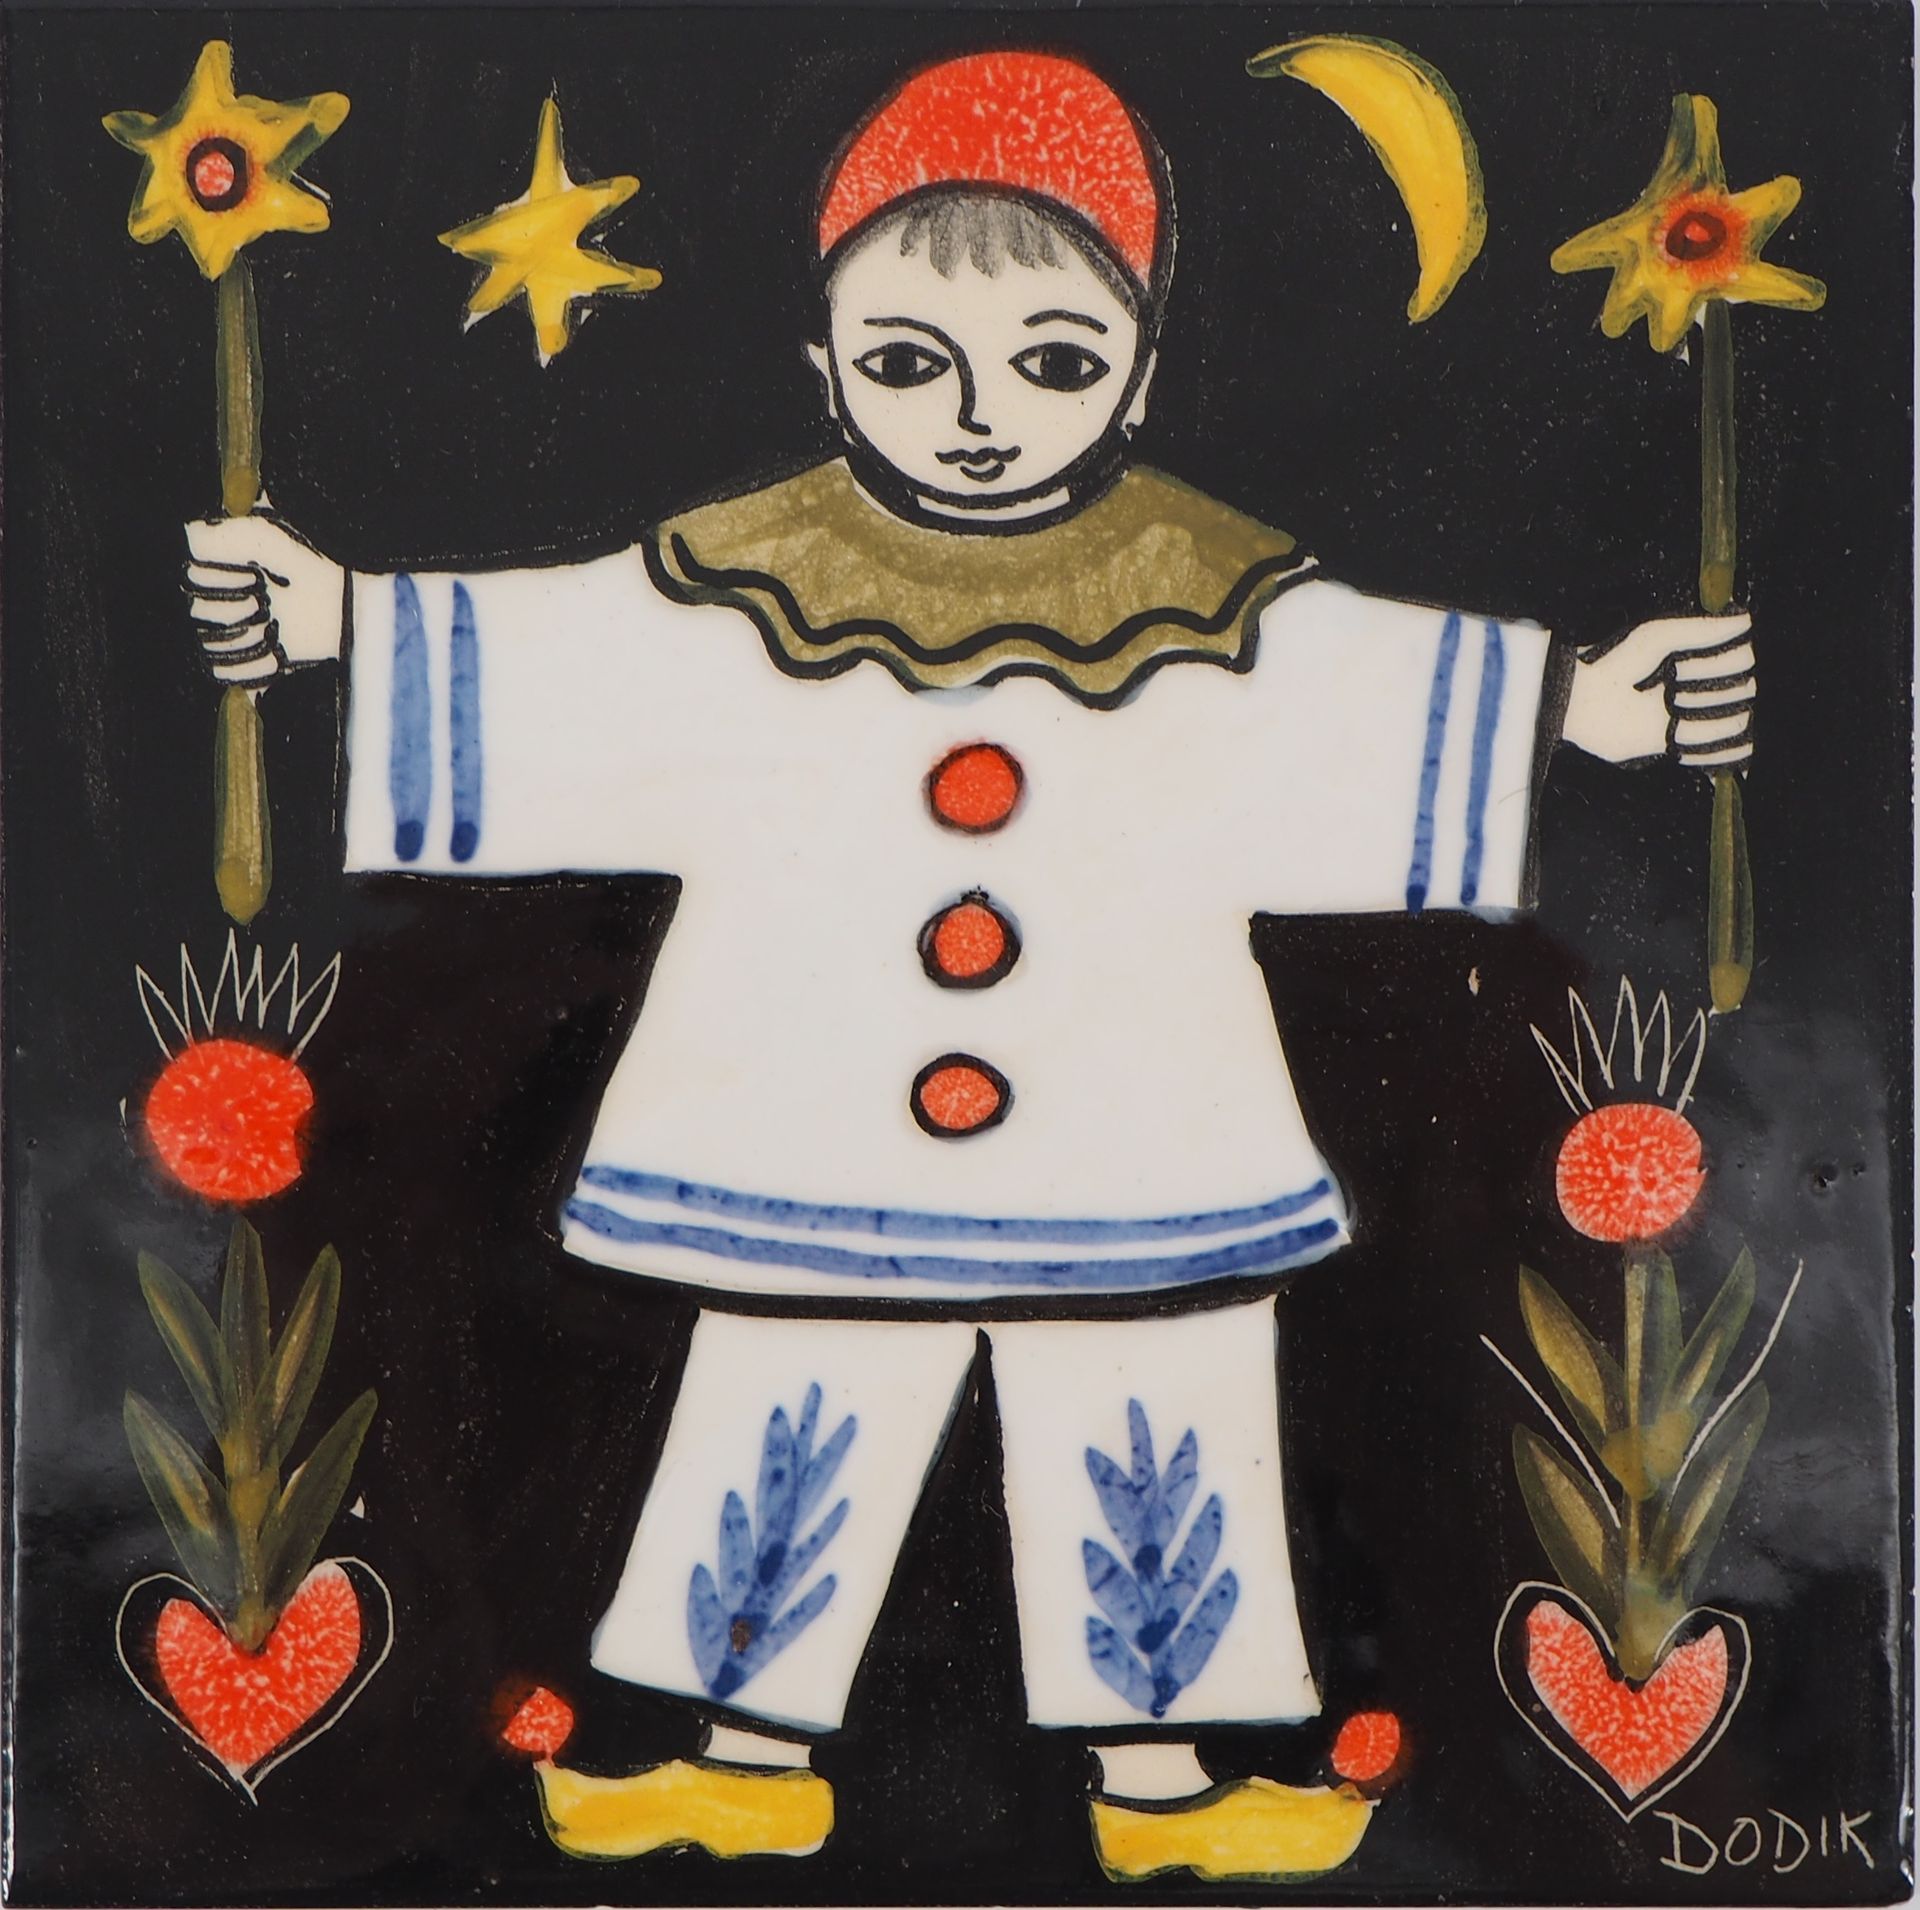 DODIK Dodok (aka Dodik Jégou, 1934-)

Pierrot La Lune

Original ceramic (Saint M&hellip;